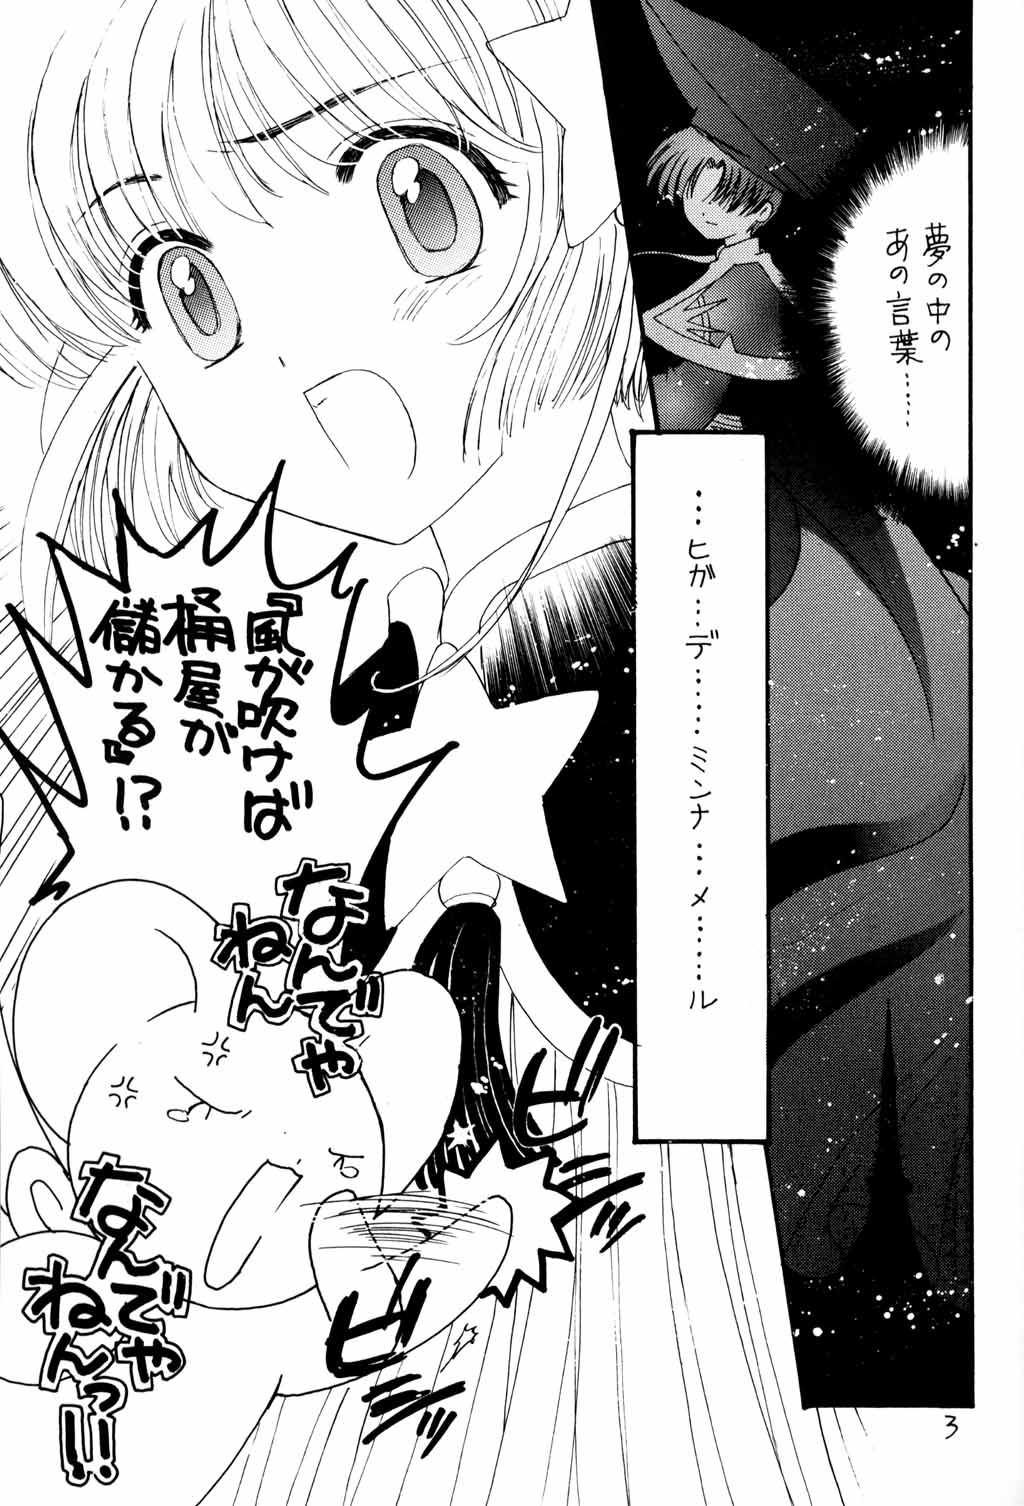 Old Vs Young Kura Kura Sakura - Cardcaptor sakura Pov Blow Job - Page 2